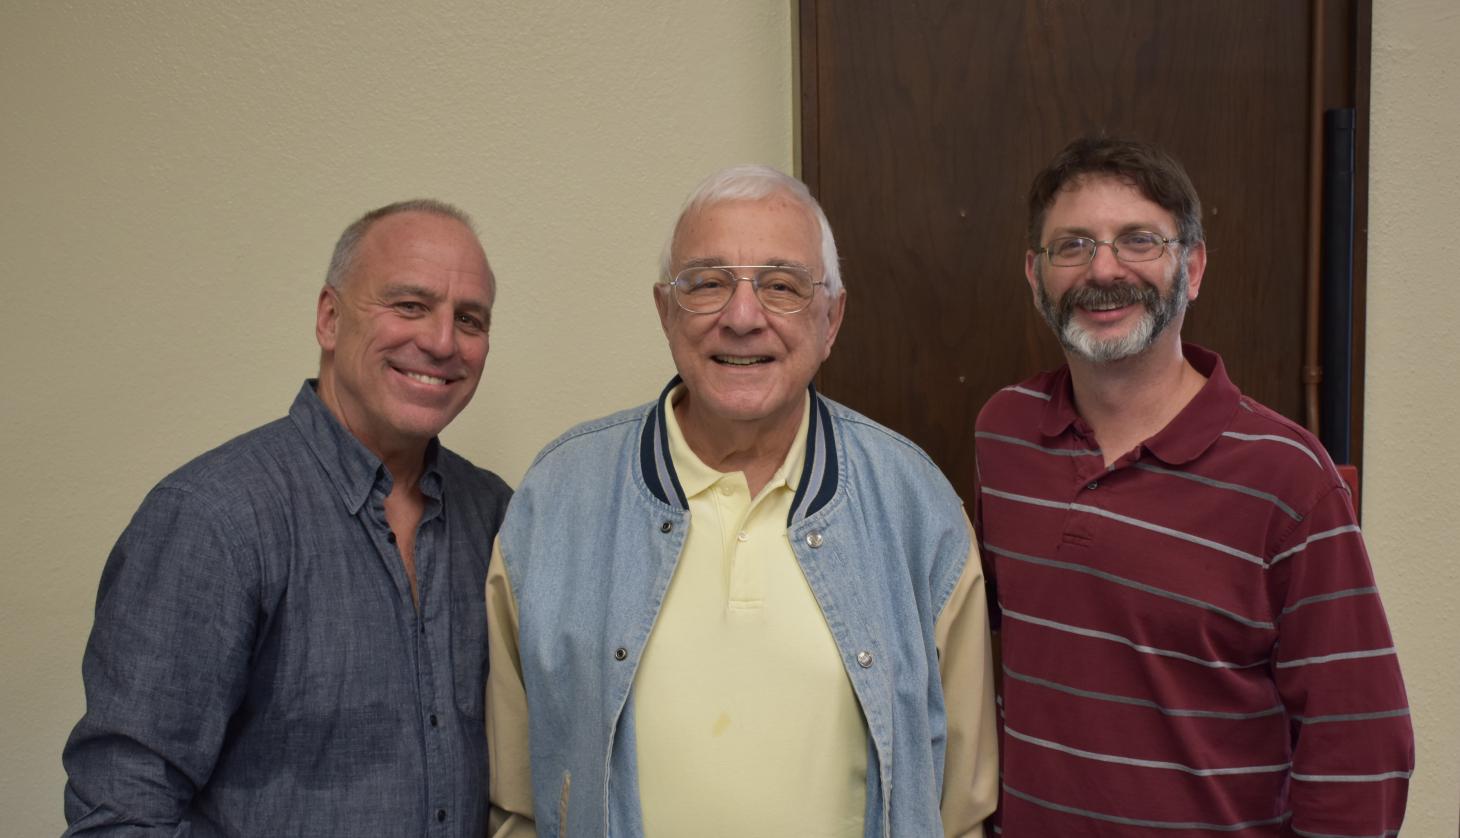 Professors John Lynch, Harry Manos, and Mathew Berstein